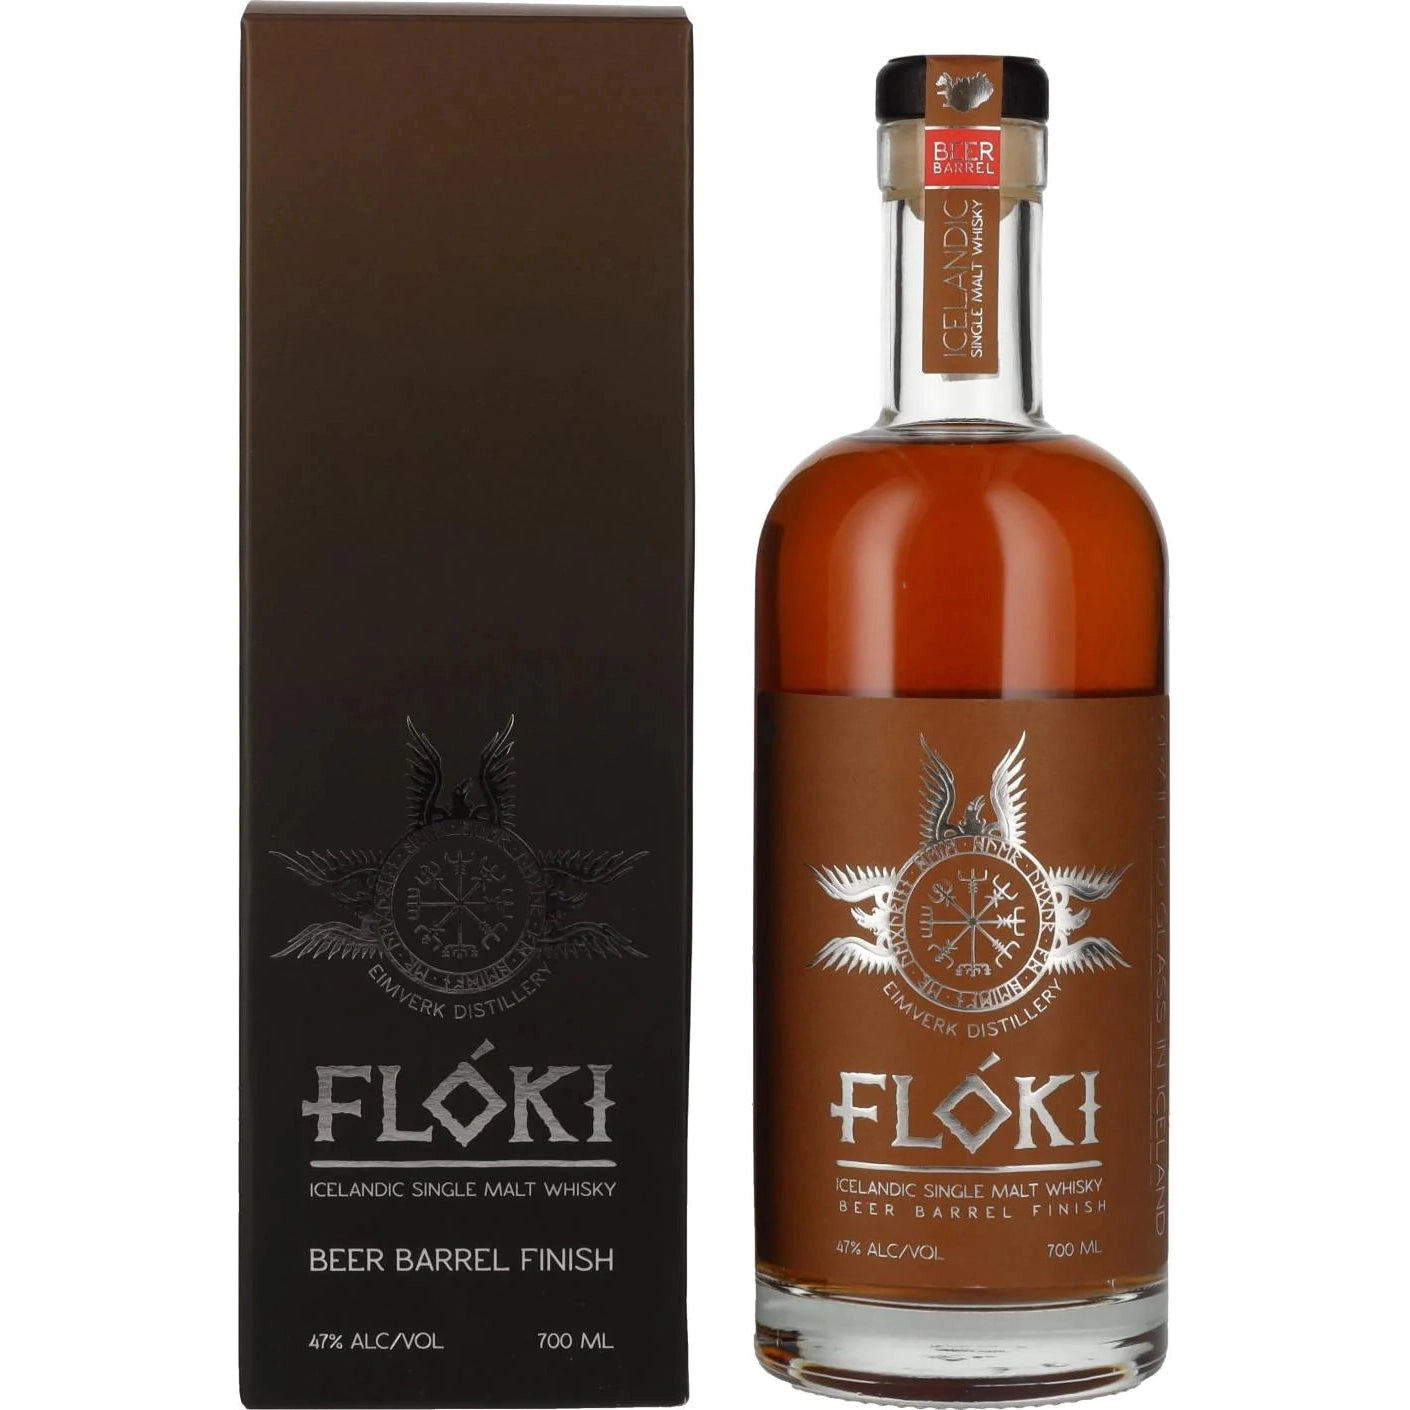 Flóki Icelandic Single Malt Whisky BEER BARREL Finish 47% Vol. 0,7l in Giftbox